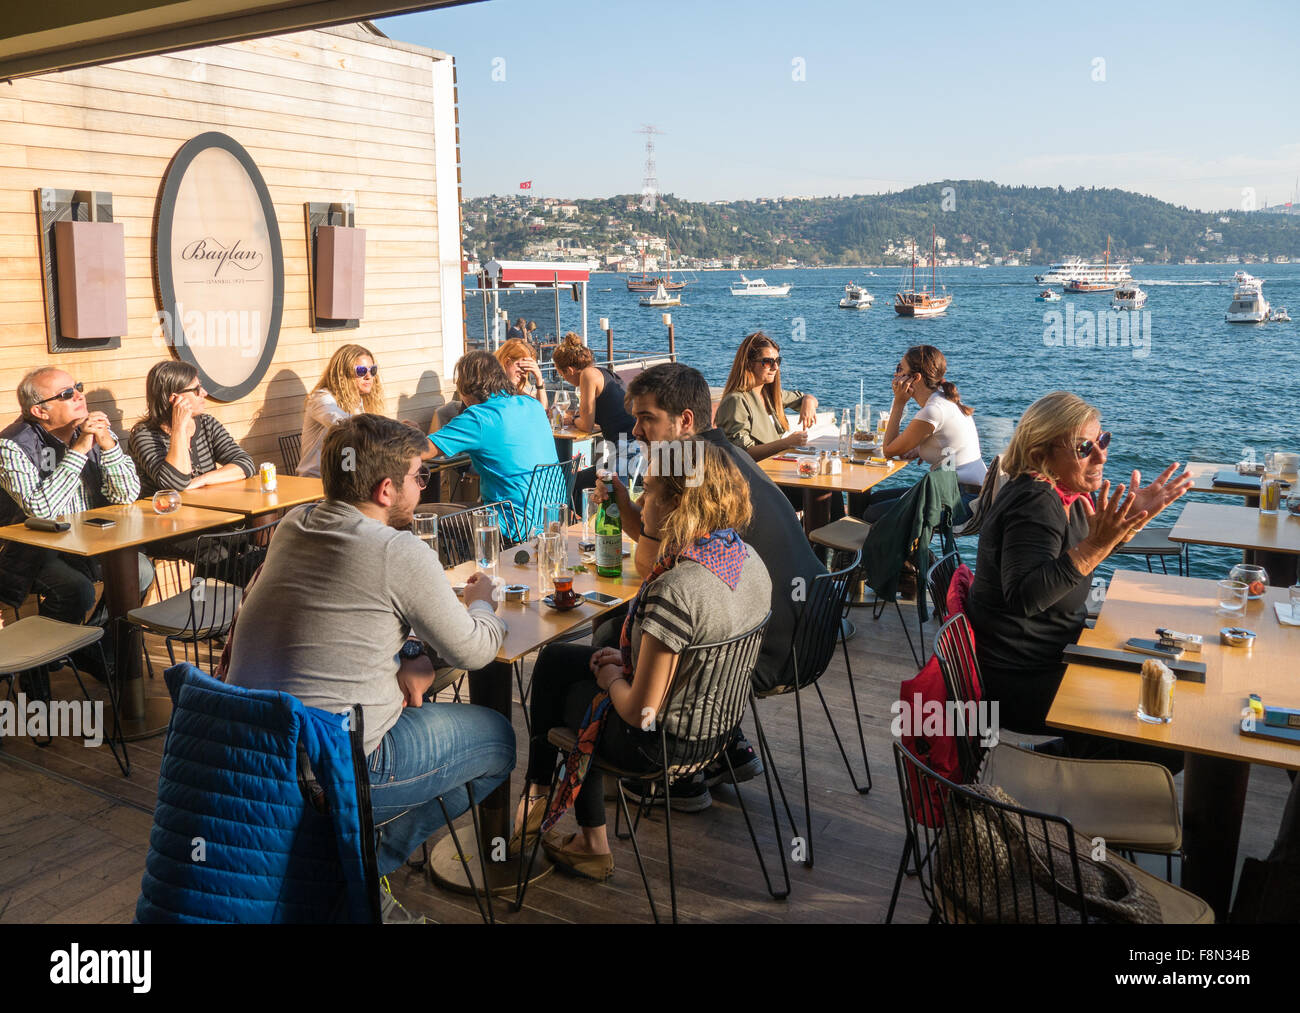 Baylan cafe, bar and restaurant in Bebek Istanbul Turkey Stock Photo